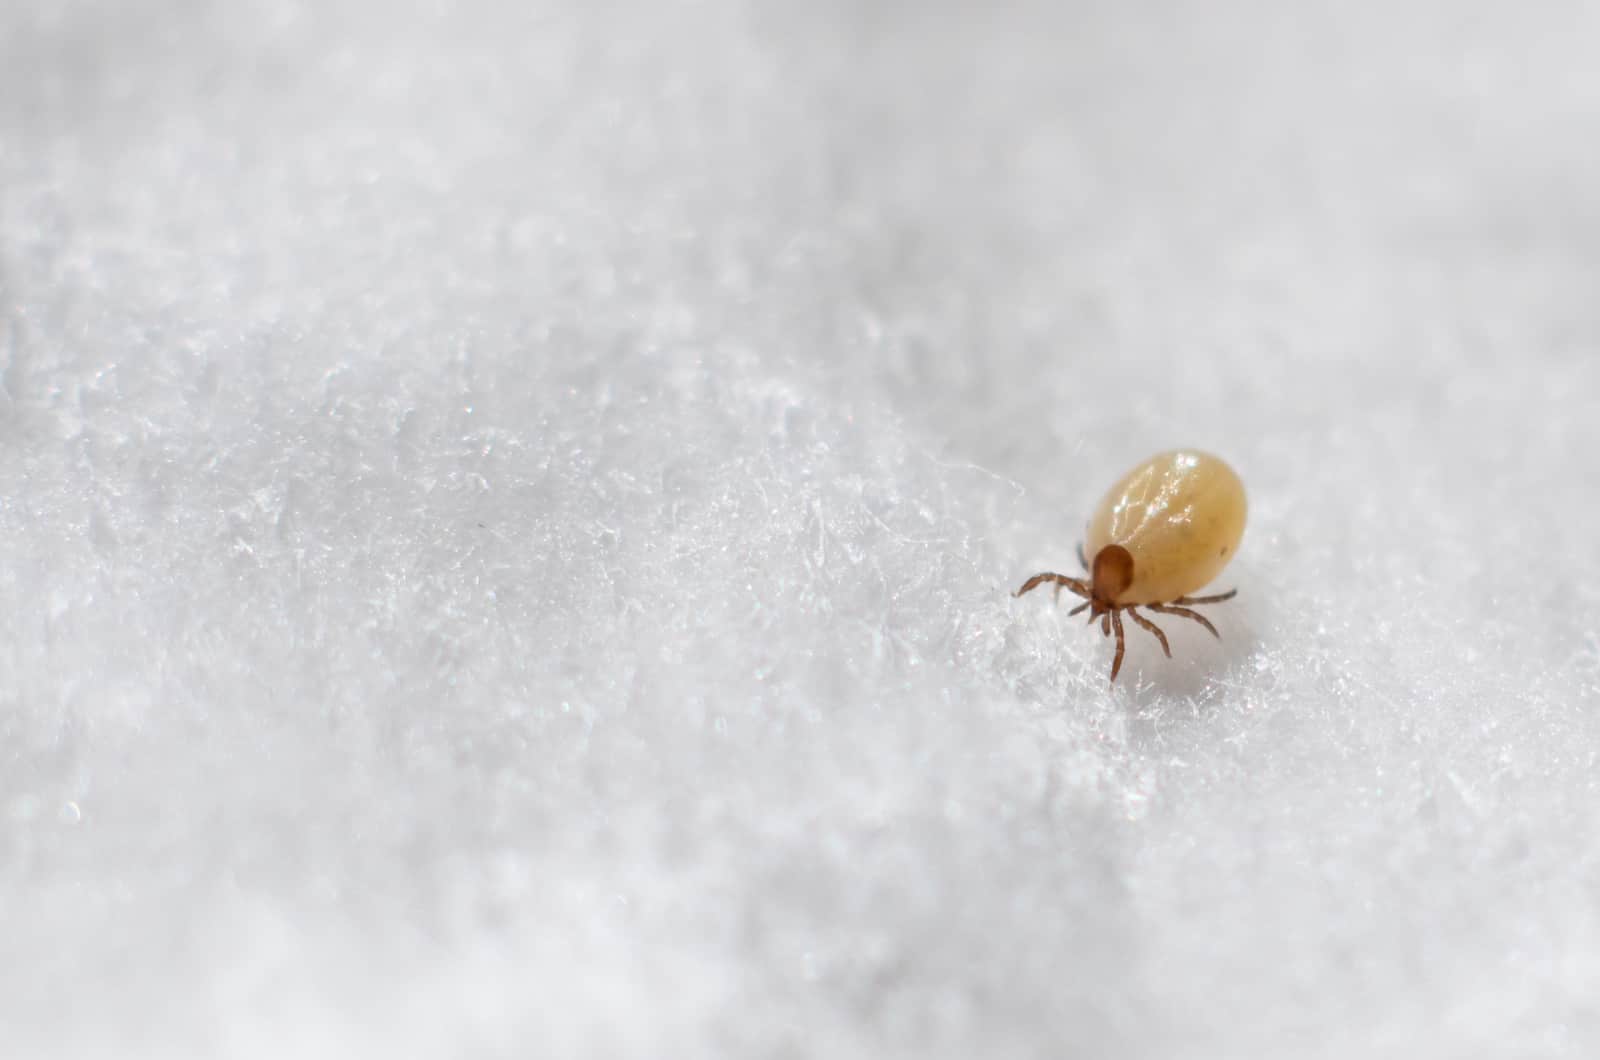 mites on white surface